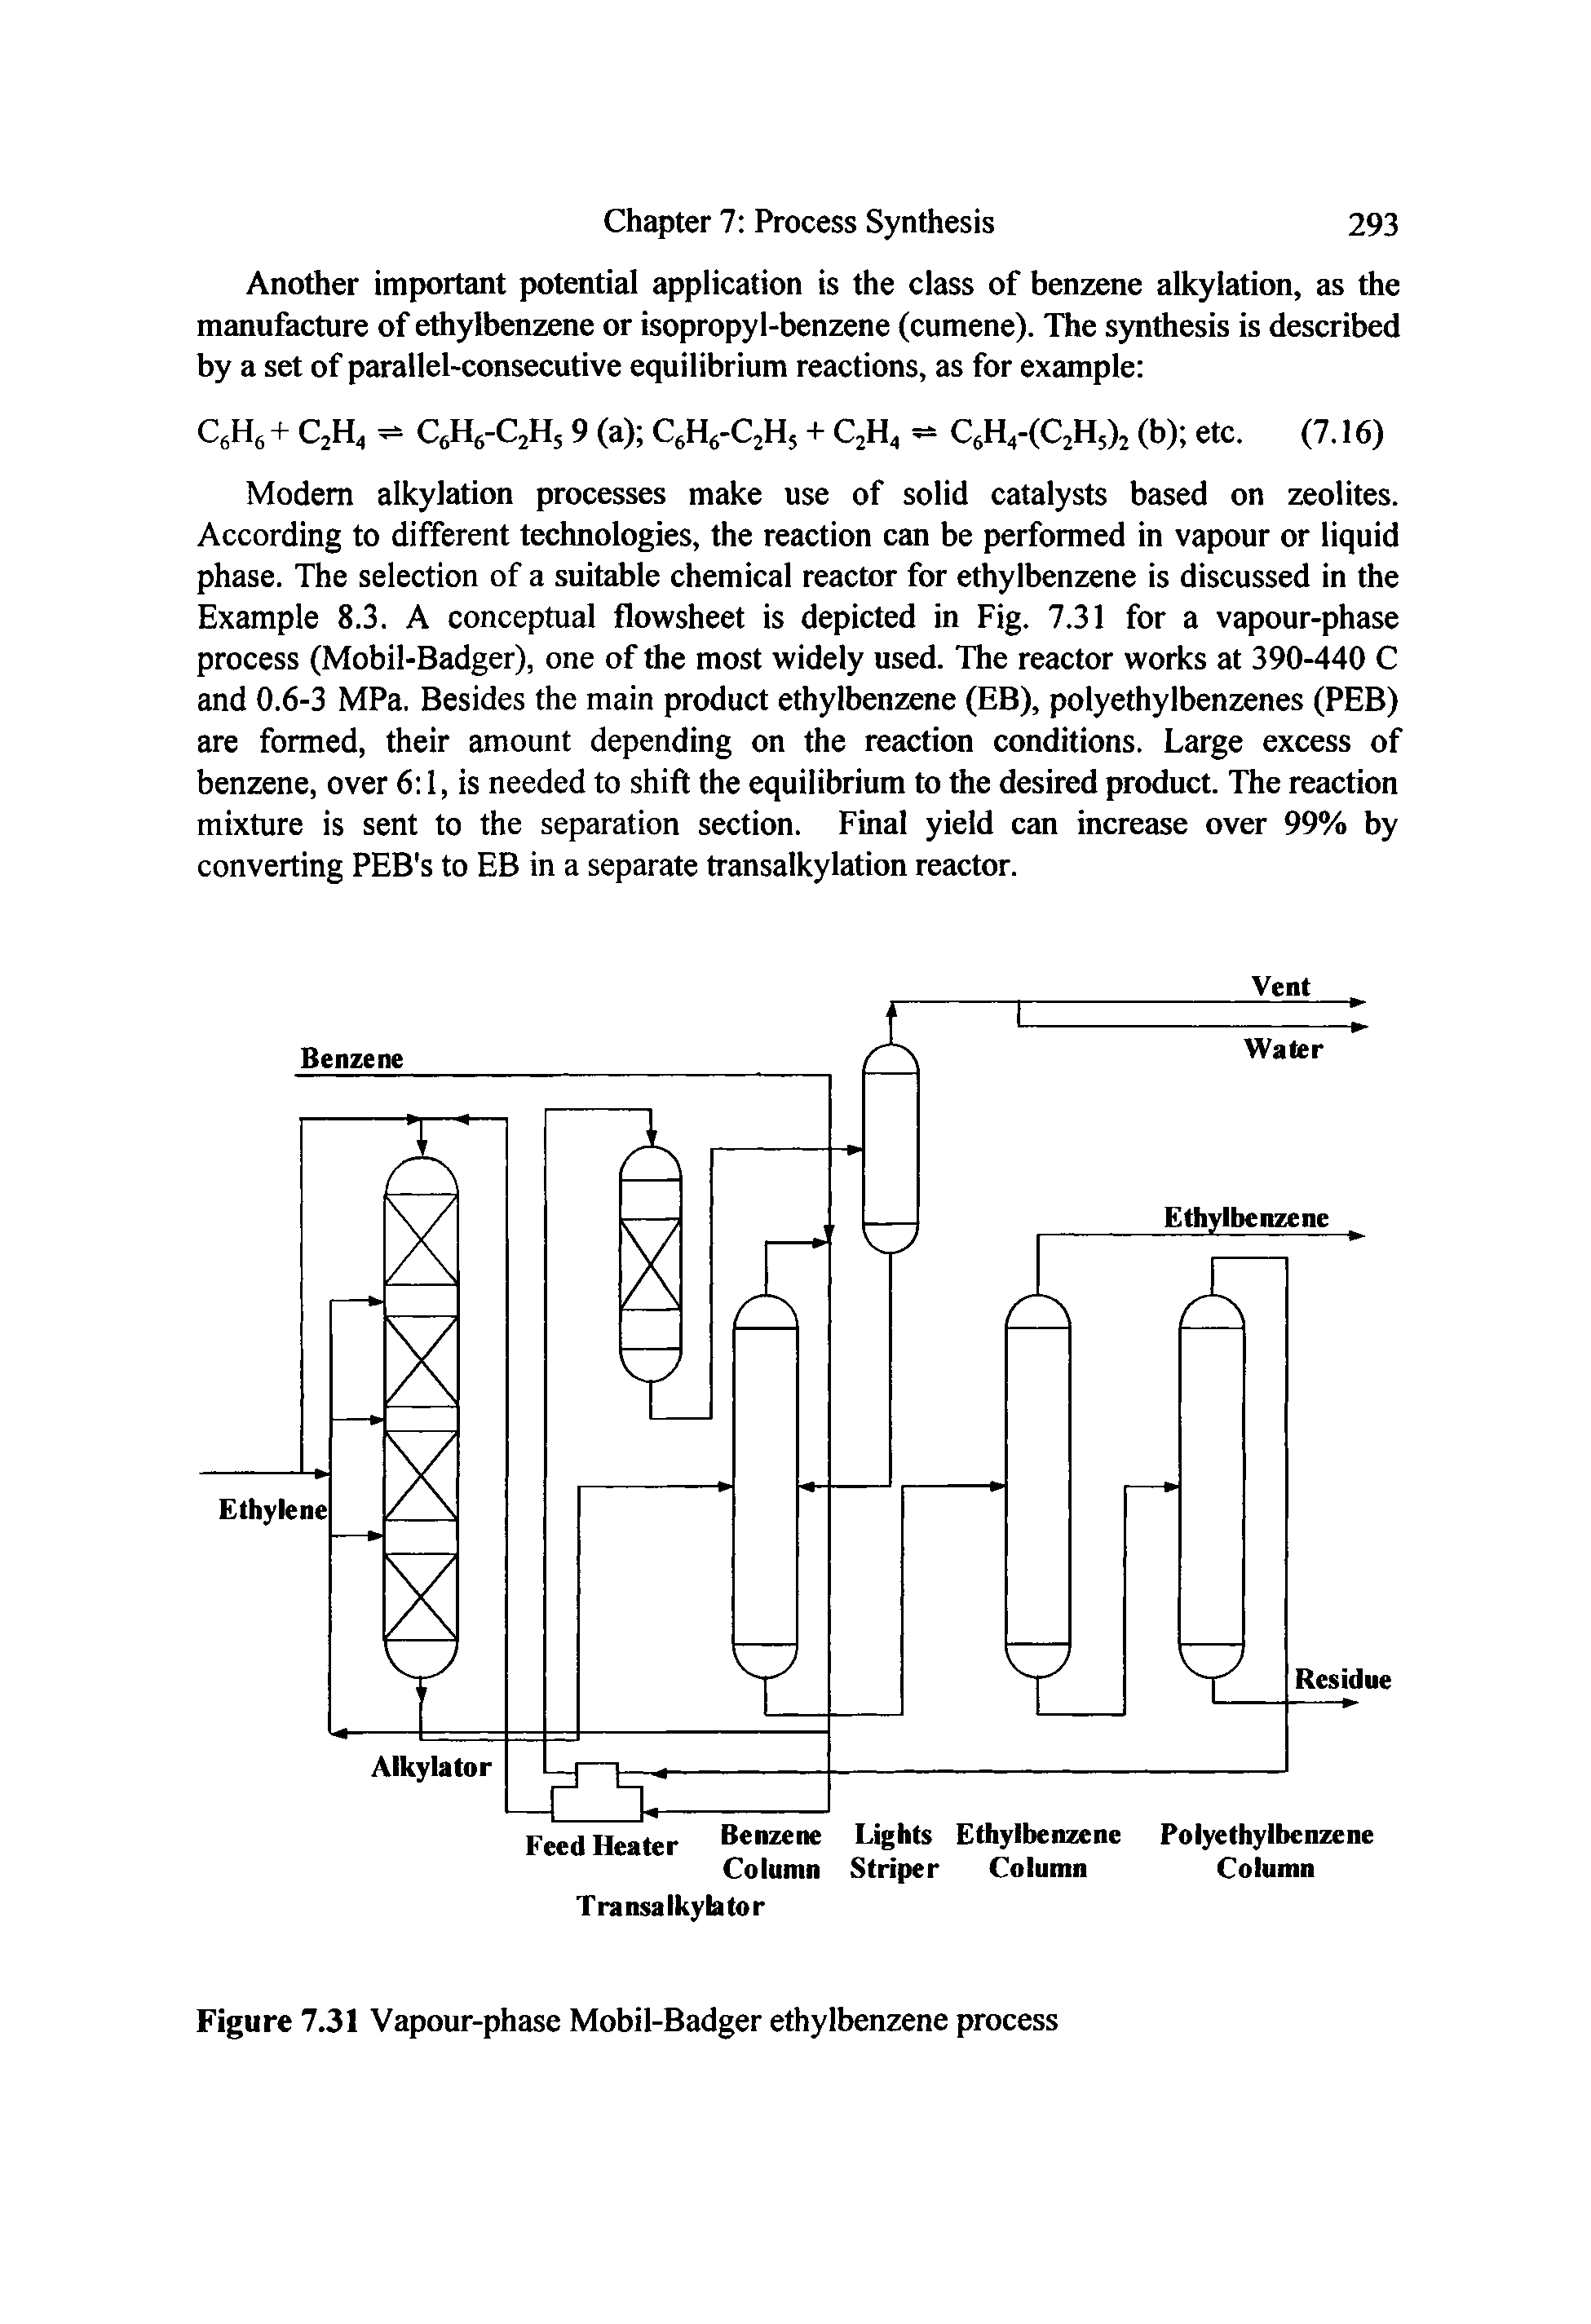 Figure 7.31 Vapour-phase Mobil-Badger ethylbenzene process...